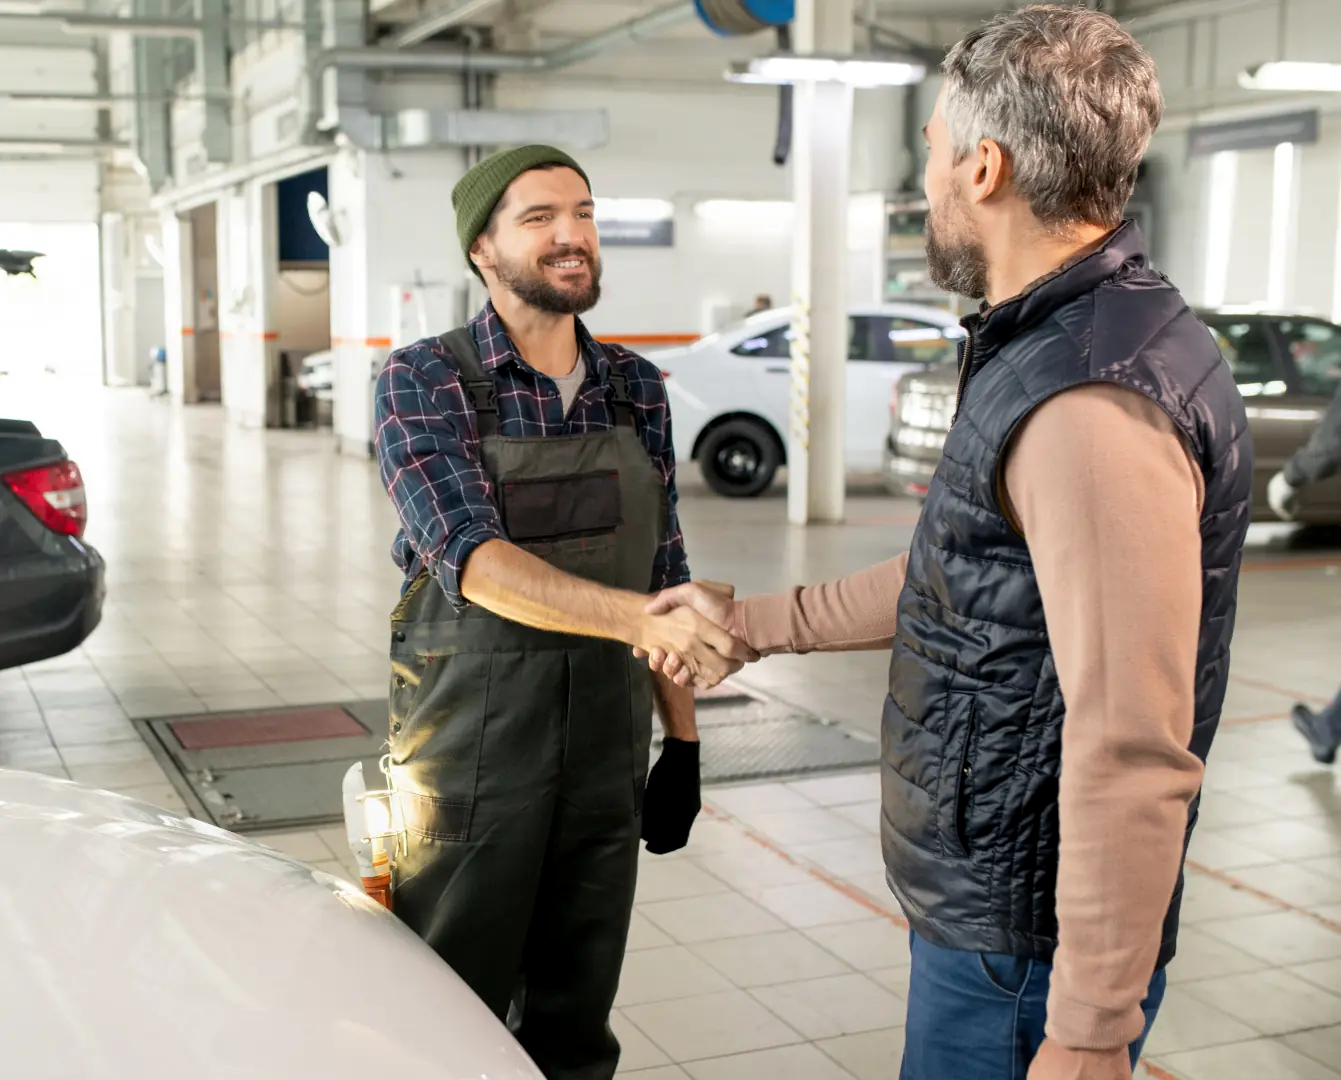 A mechanic and a customer shaking hands inside a garage.